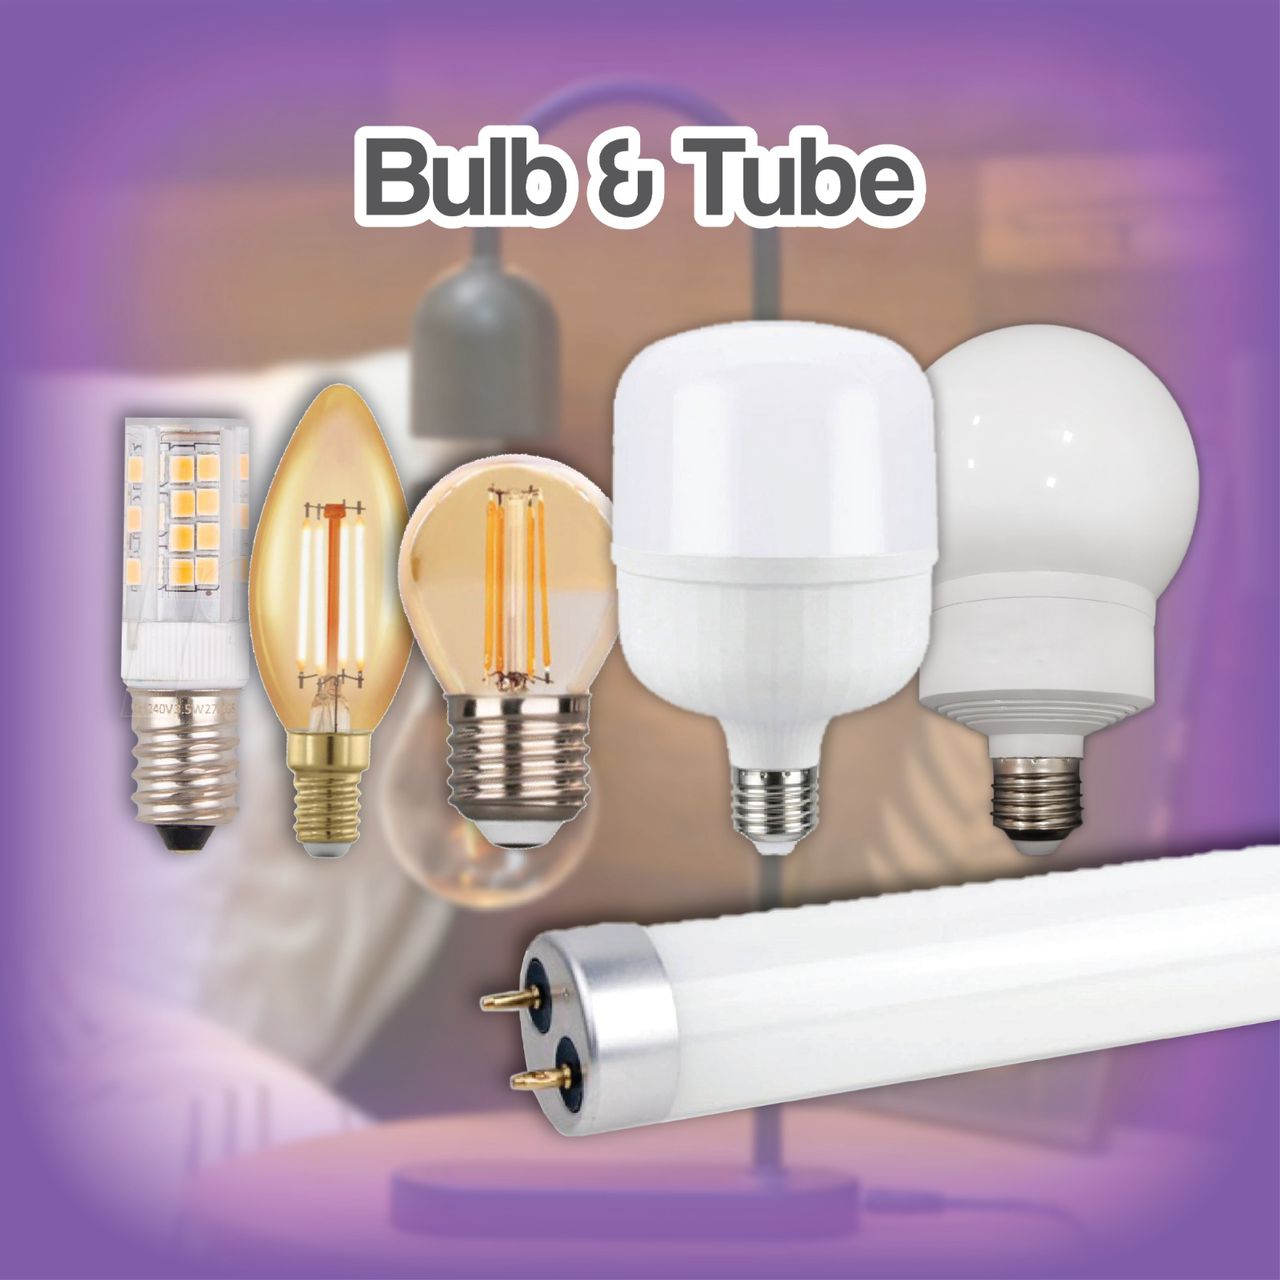 Bulb&Tube